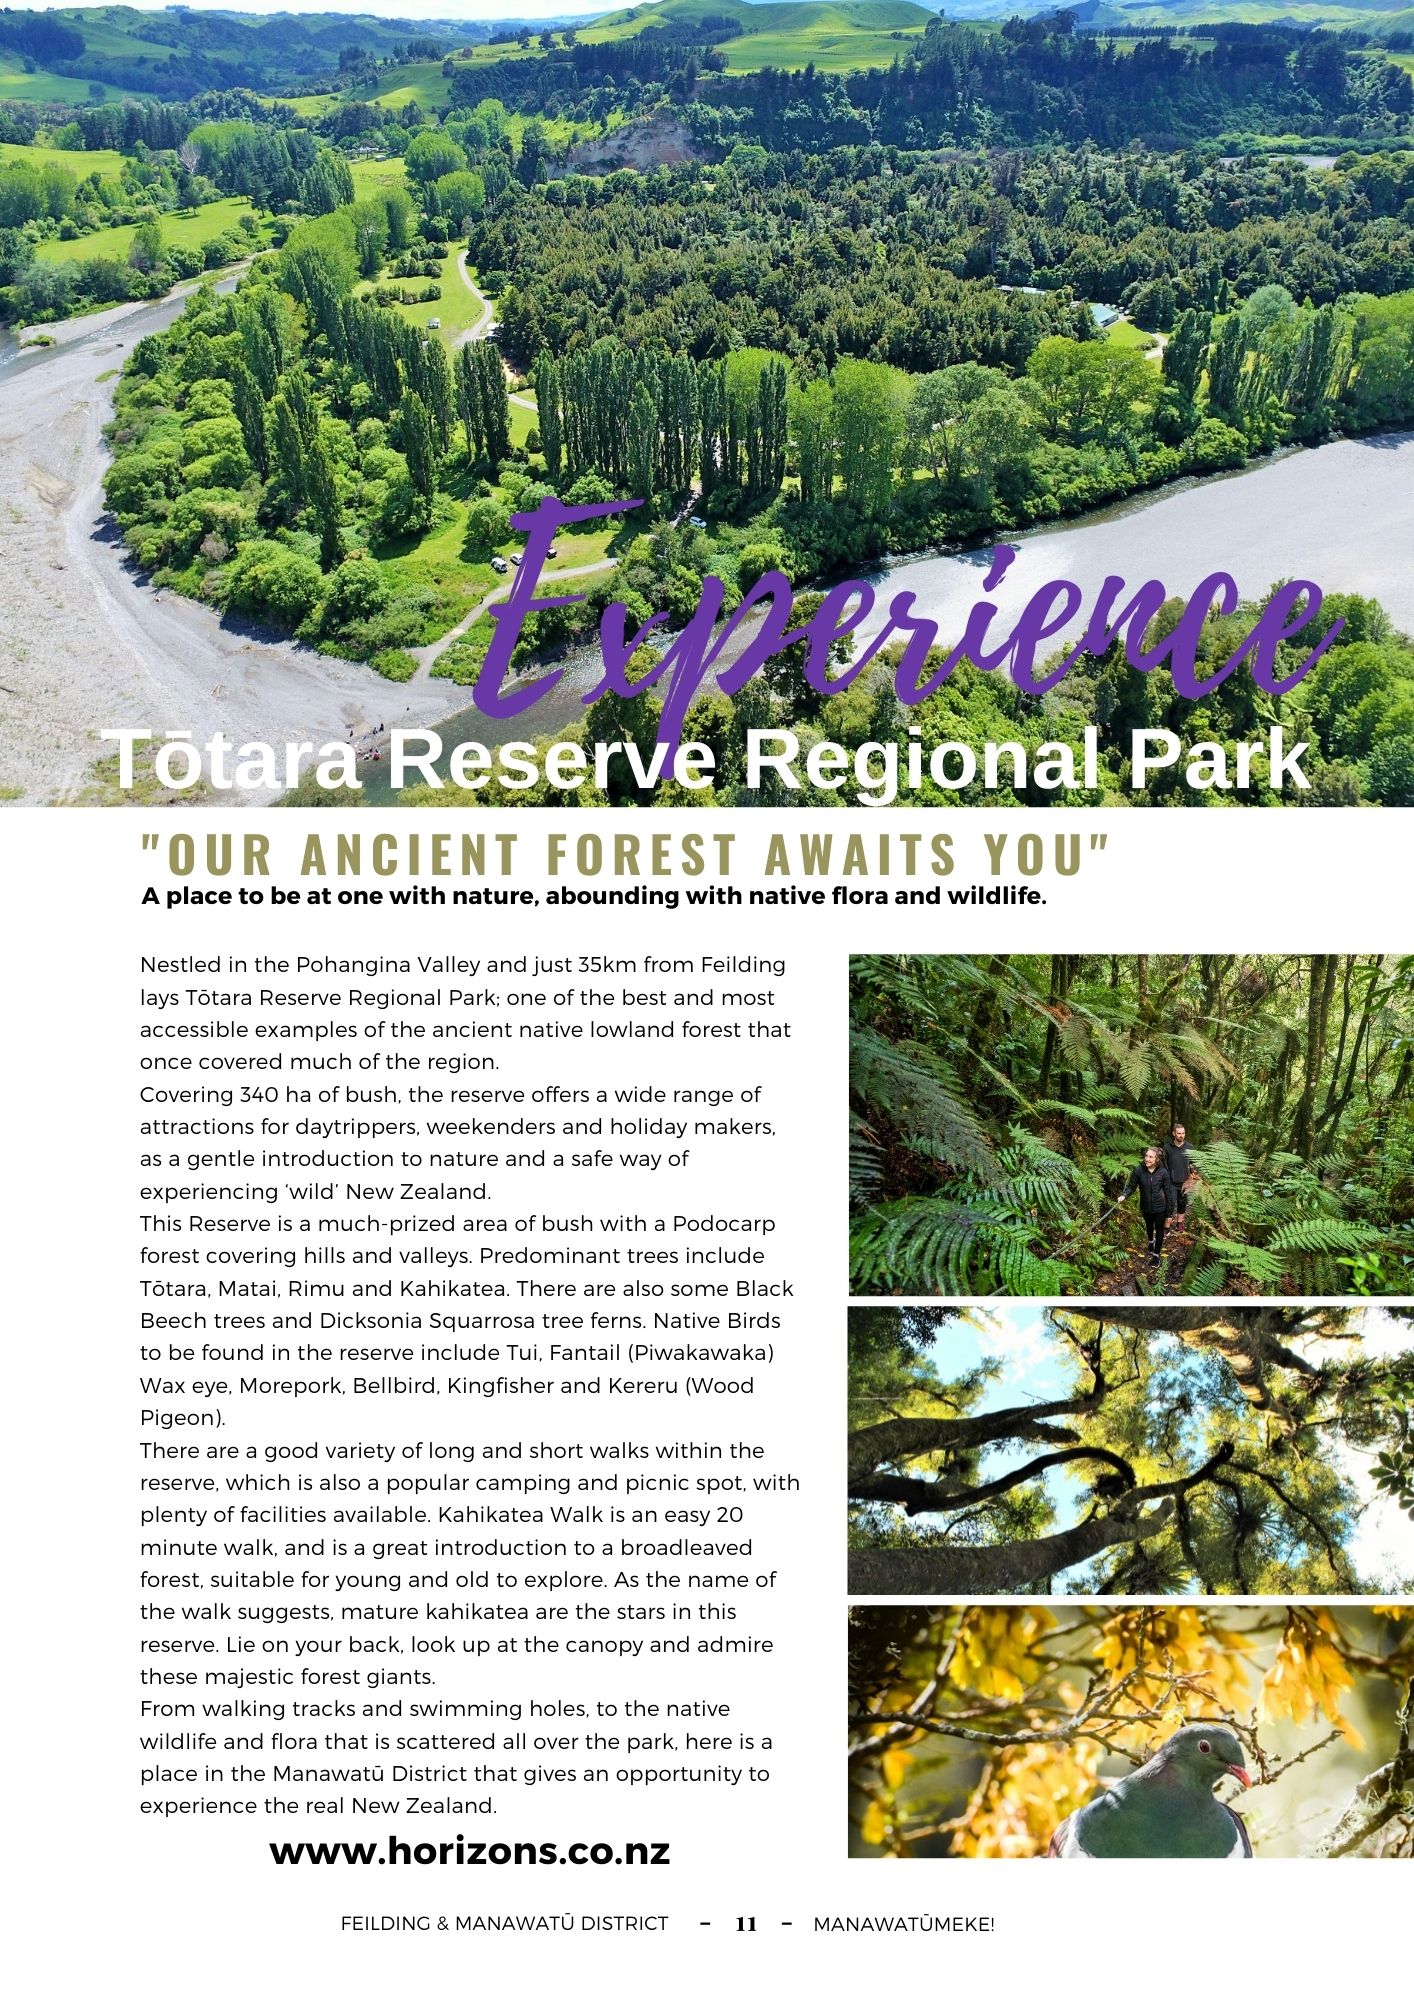 Manawatu Totara reserve